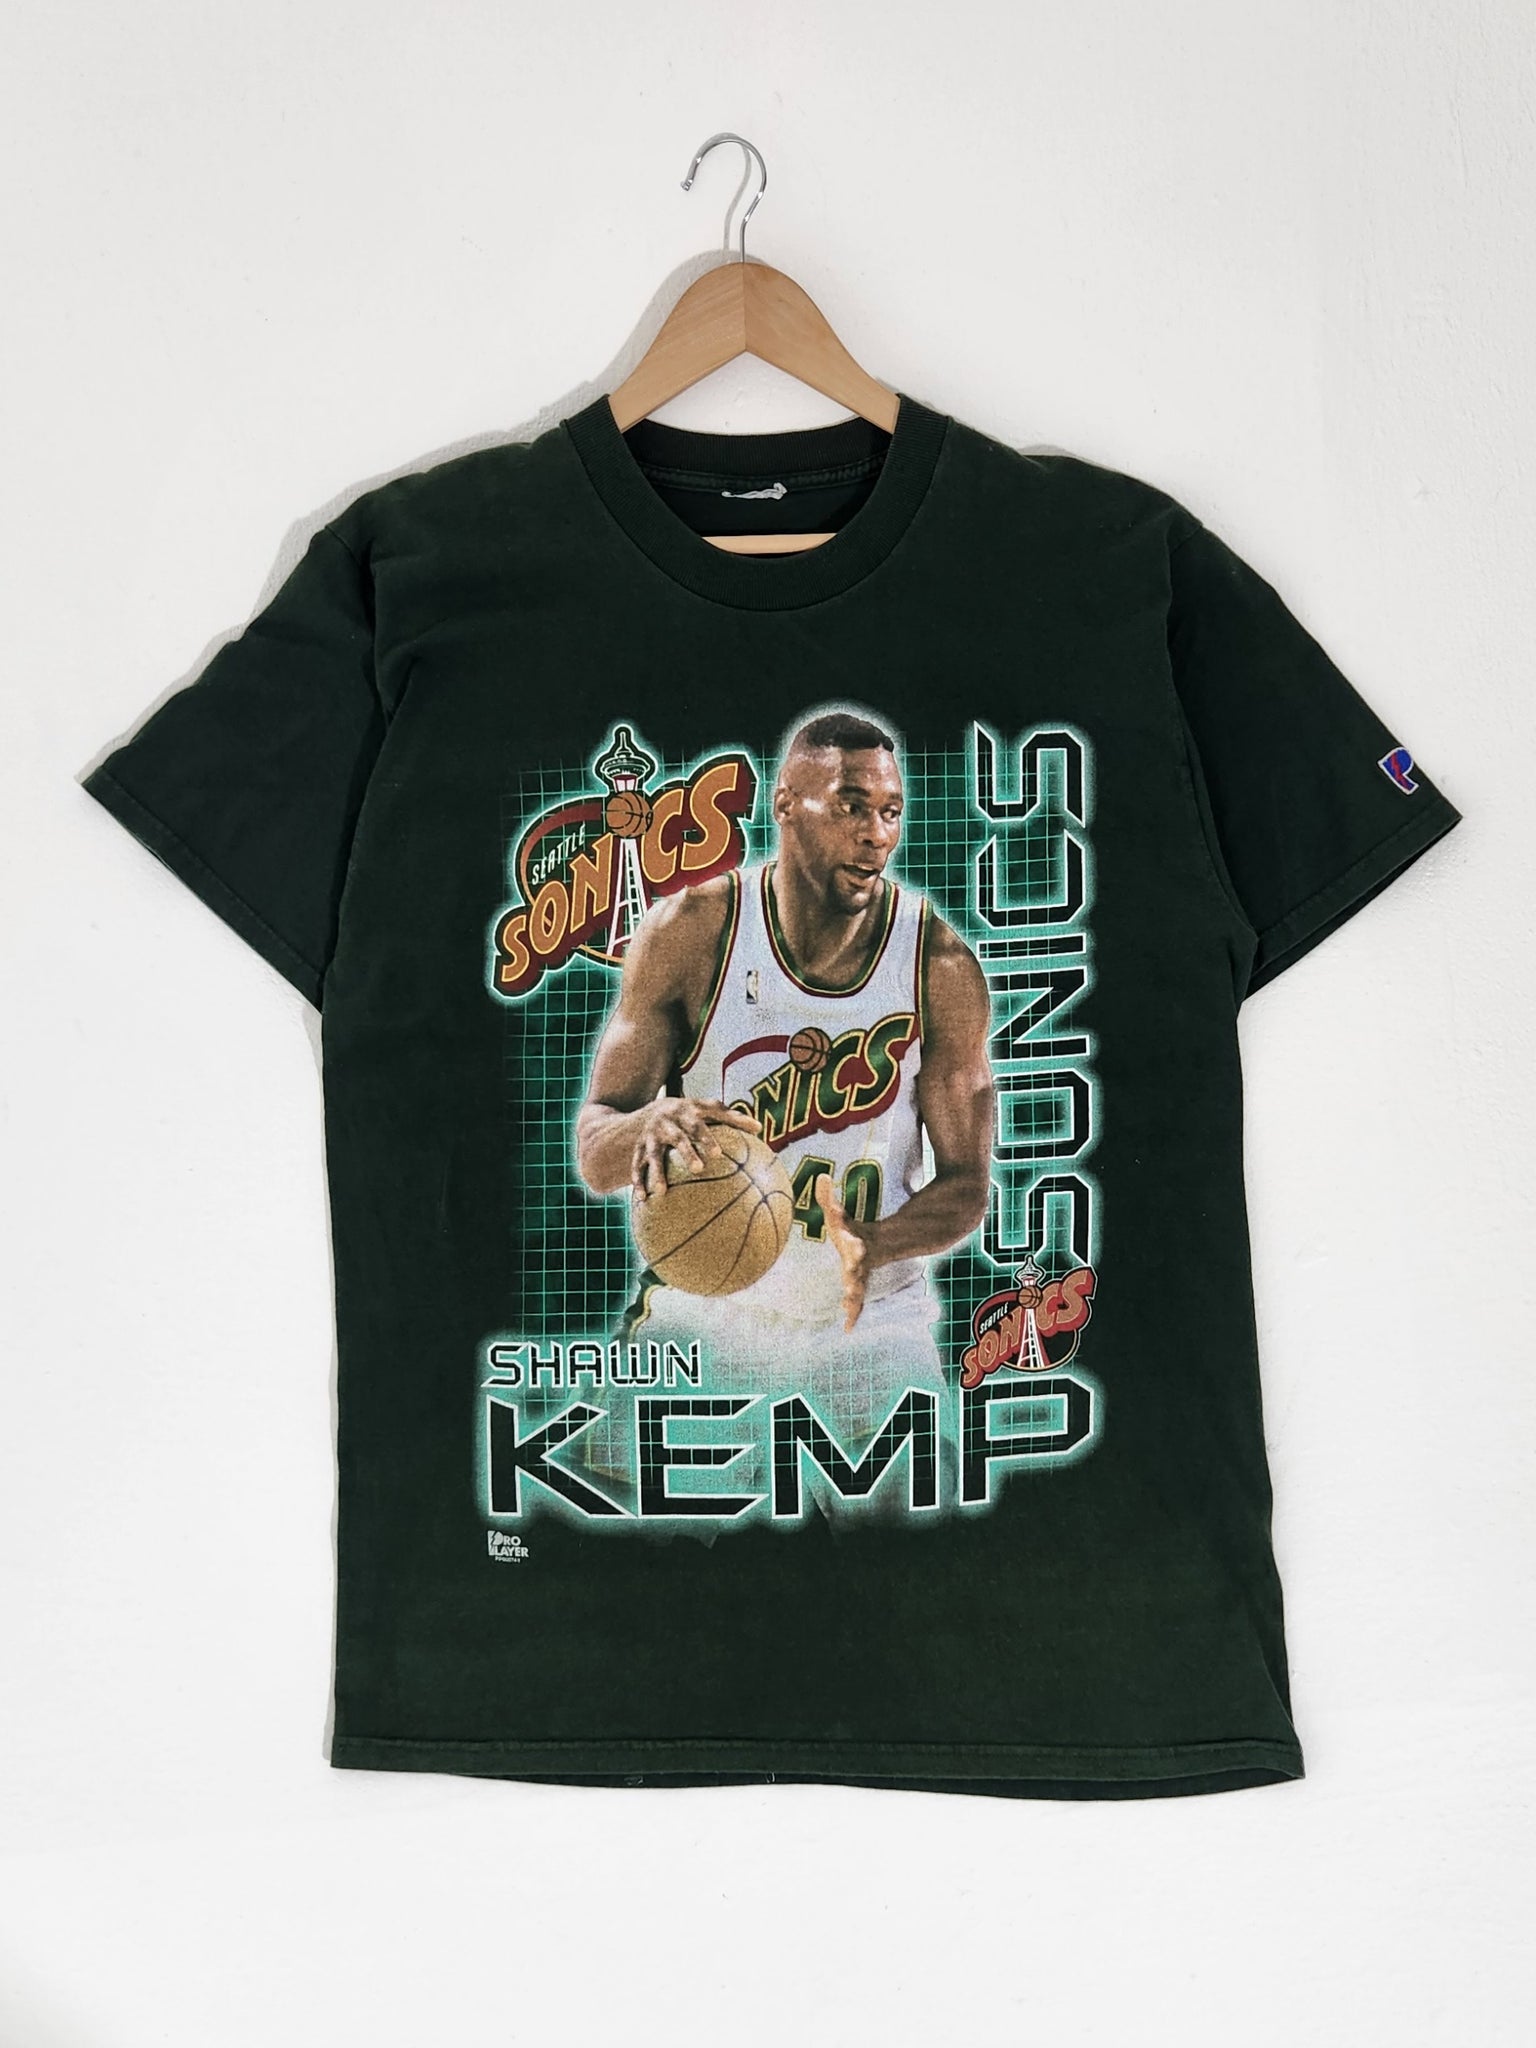 Shawn Kemp T-Shirts for Sale